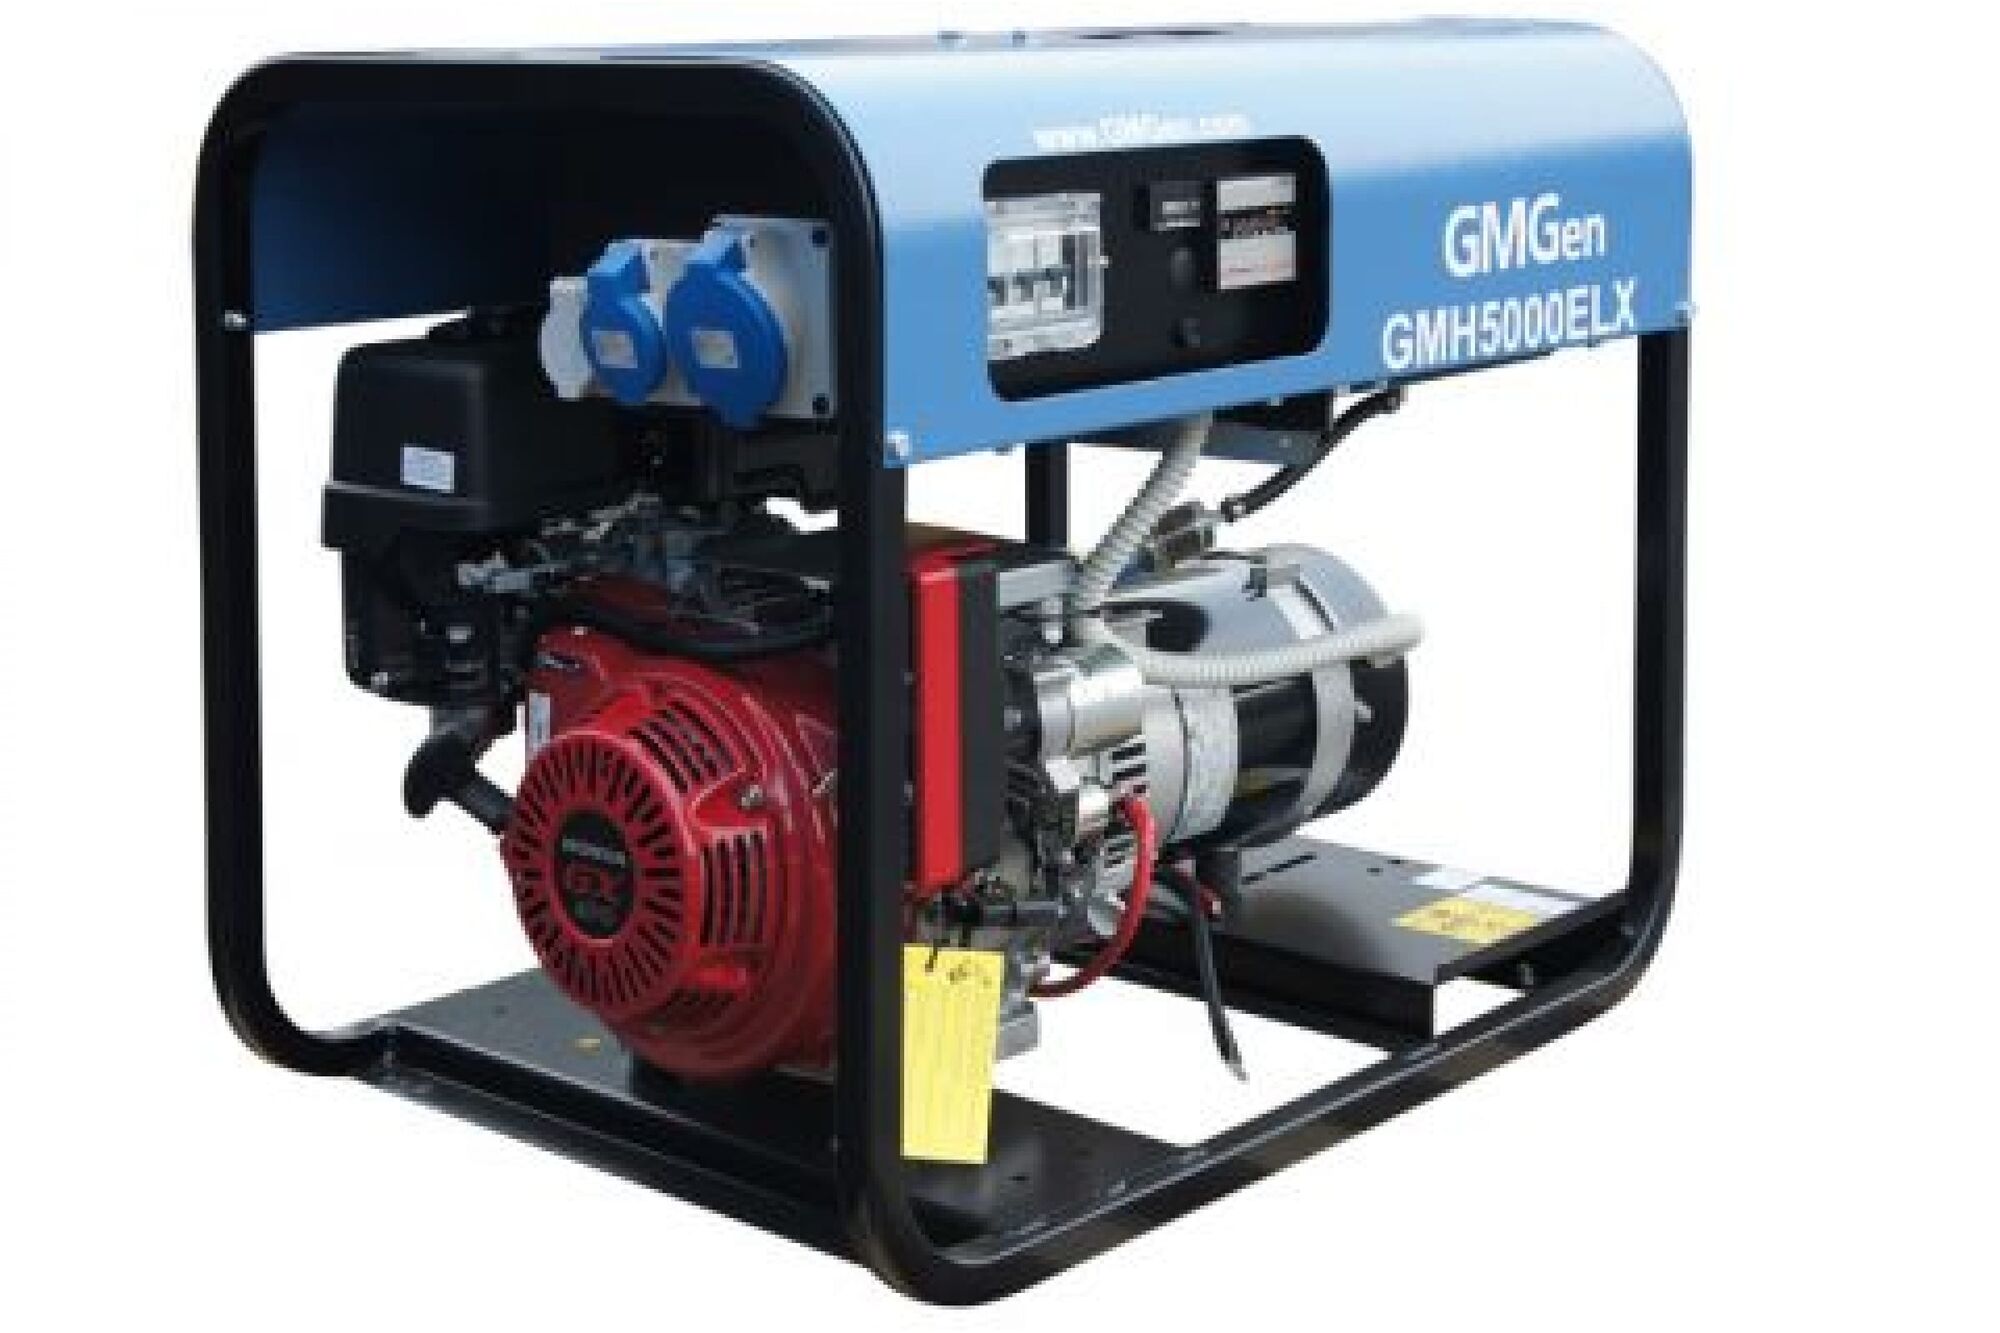 Бензогенератор GMGen Power Systems GMH5000ELX 3.3 кВт, 220 В 501839